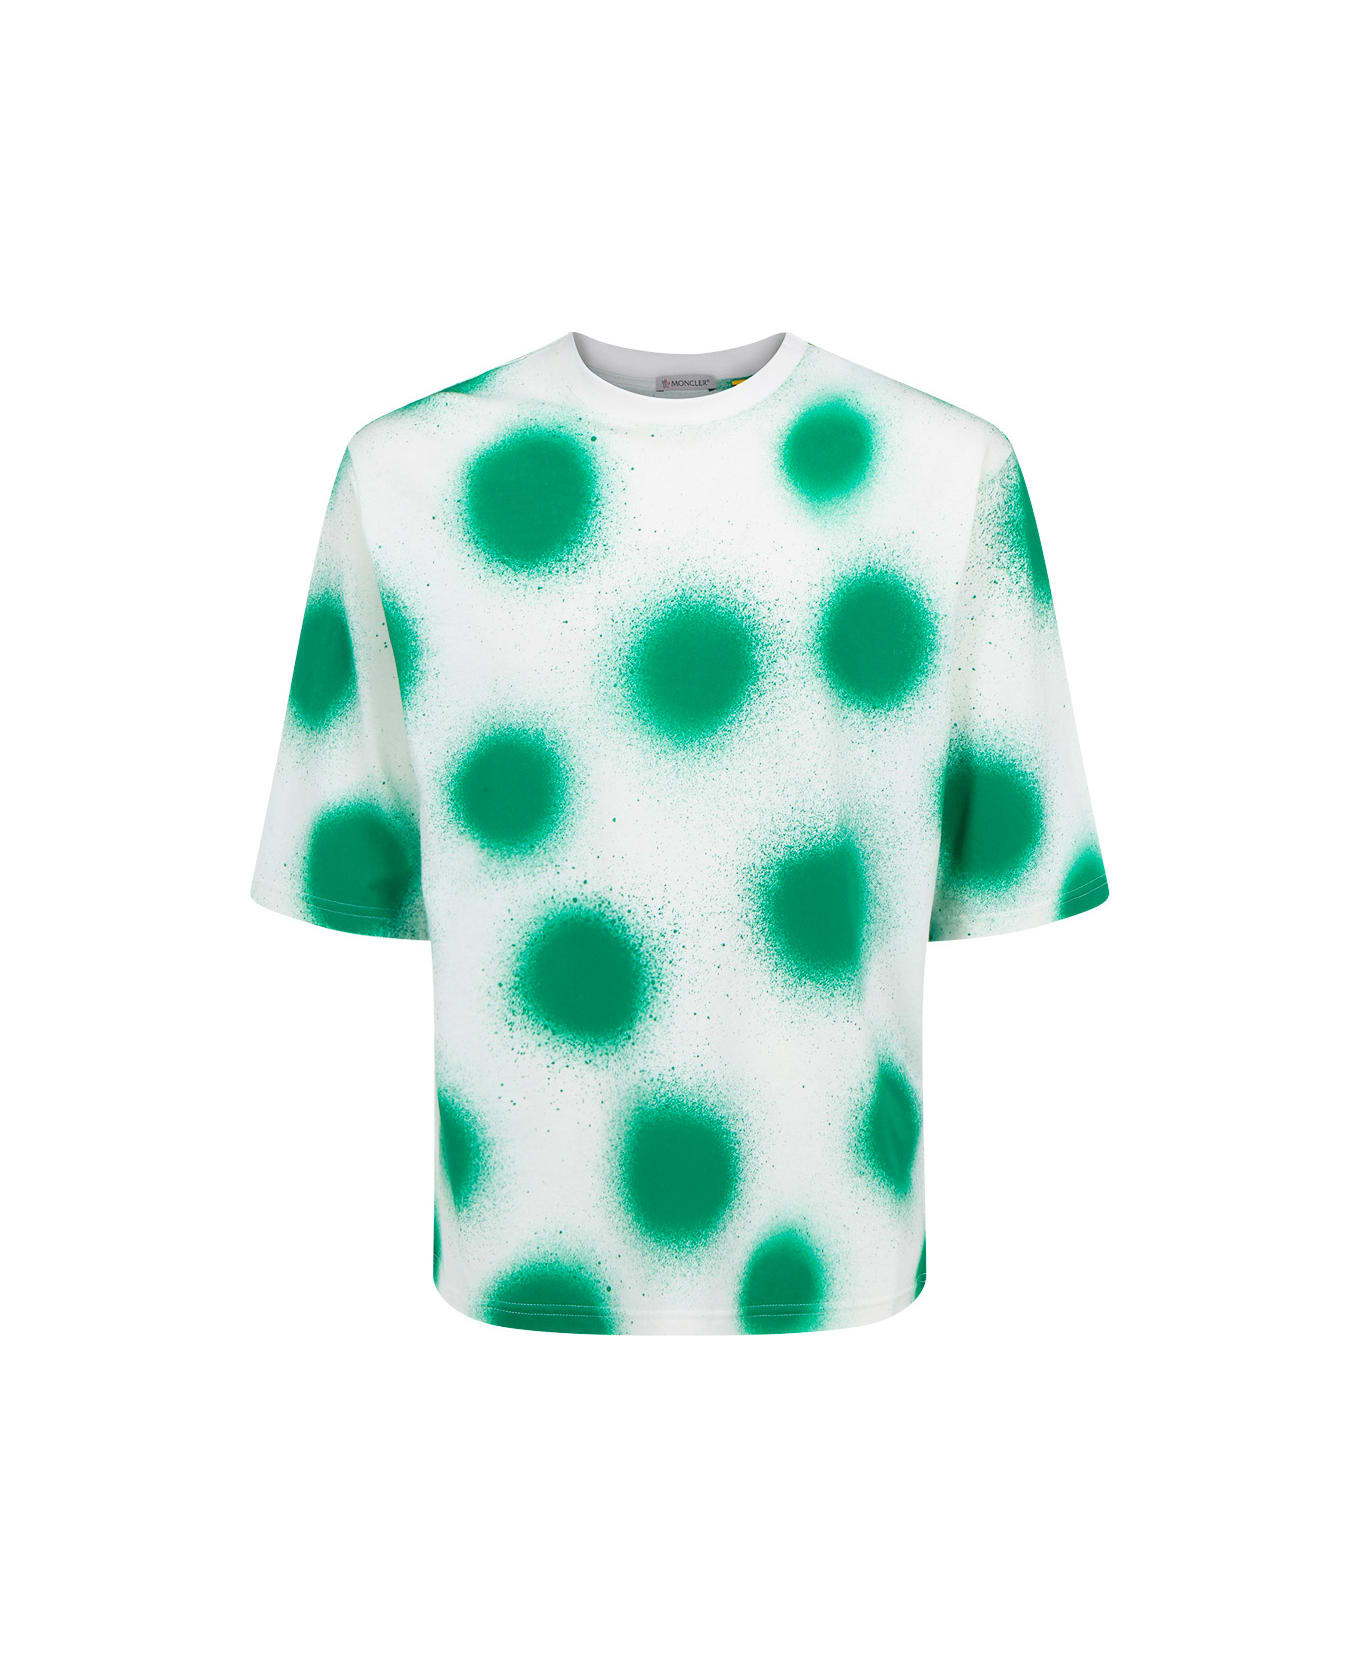 Moncler Genius T-shirt - Bianco/verde Tシャツ